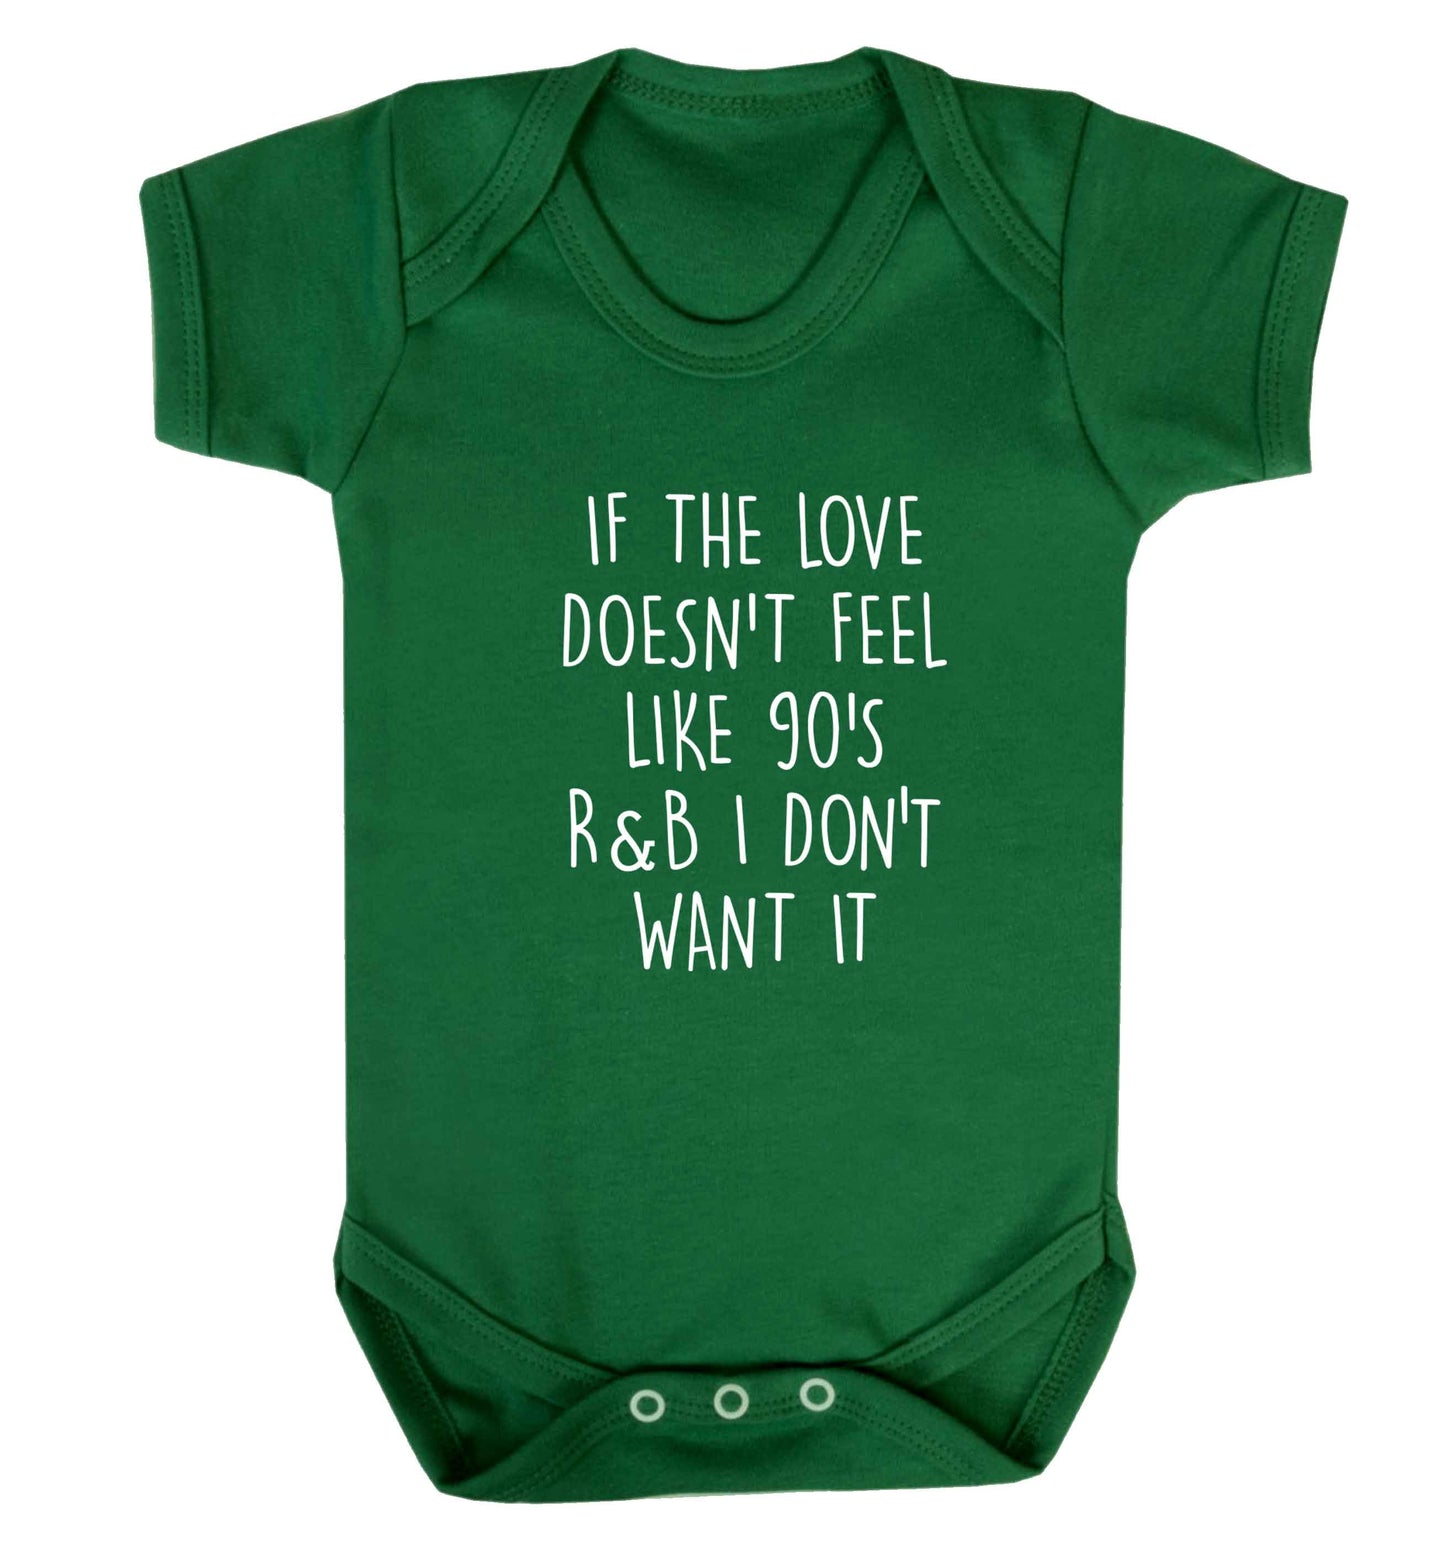 If the love doesn't feel like 90's r&b I don't want it baby vest green 18-24 months